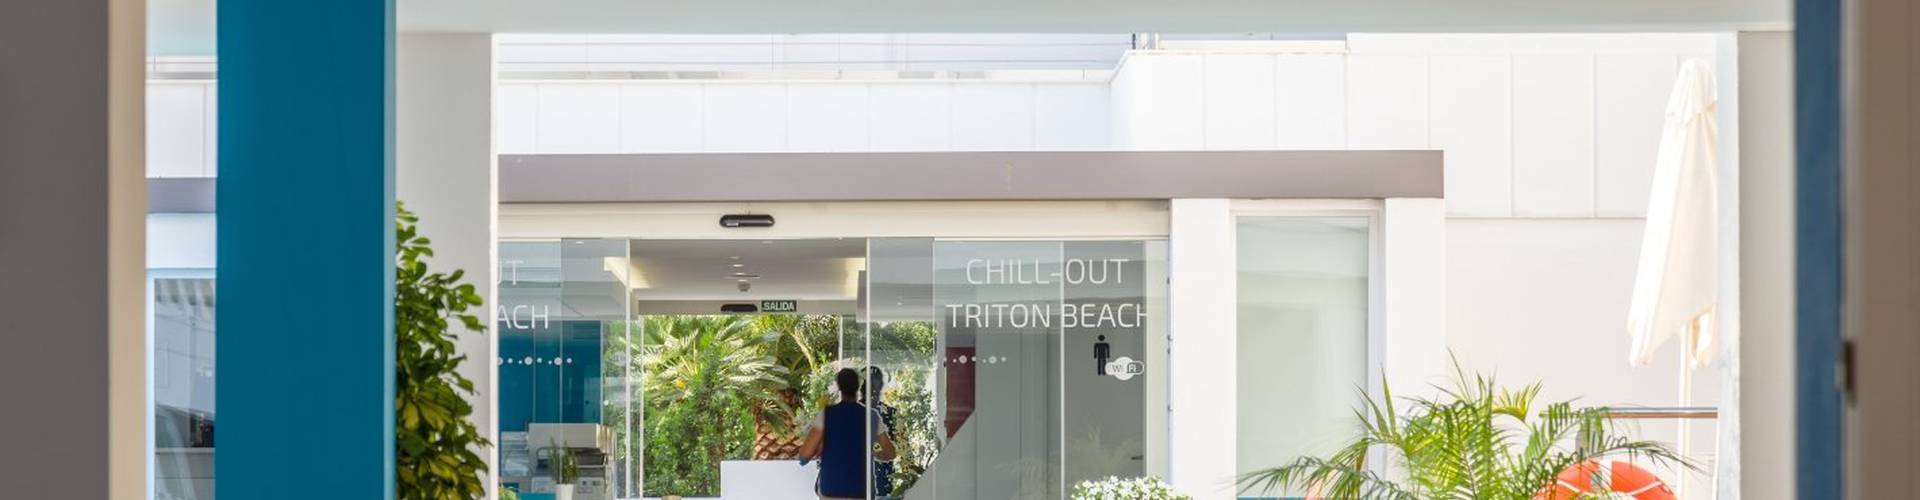 Hotel Triton - Cala Ratjada - Triton Beach Hotel Legal Notice